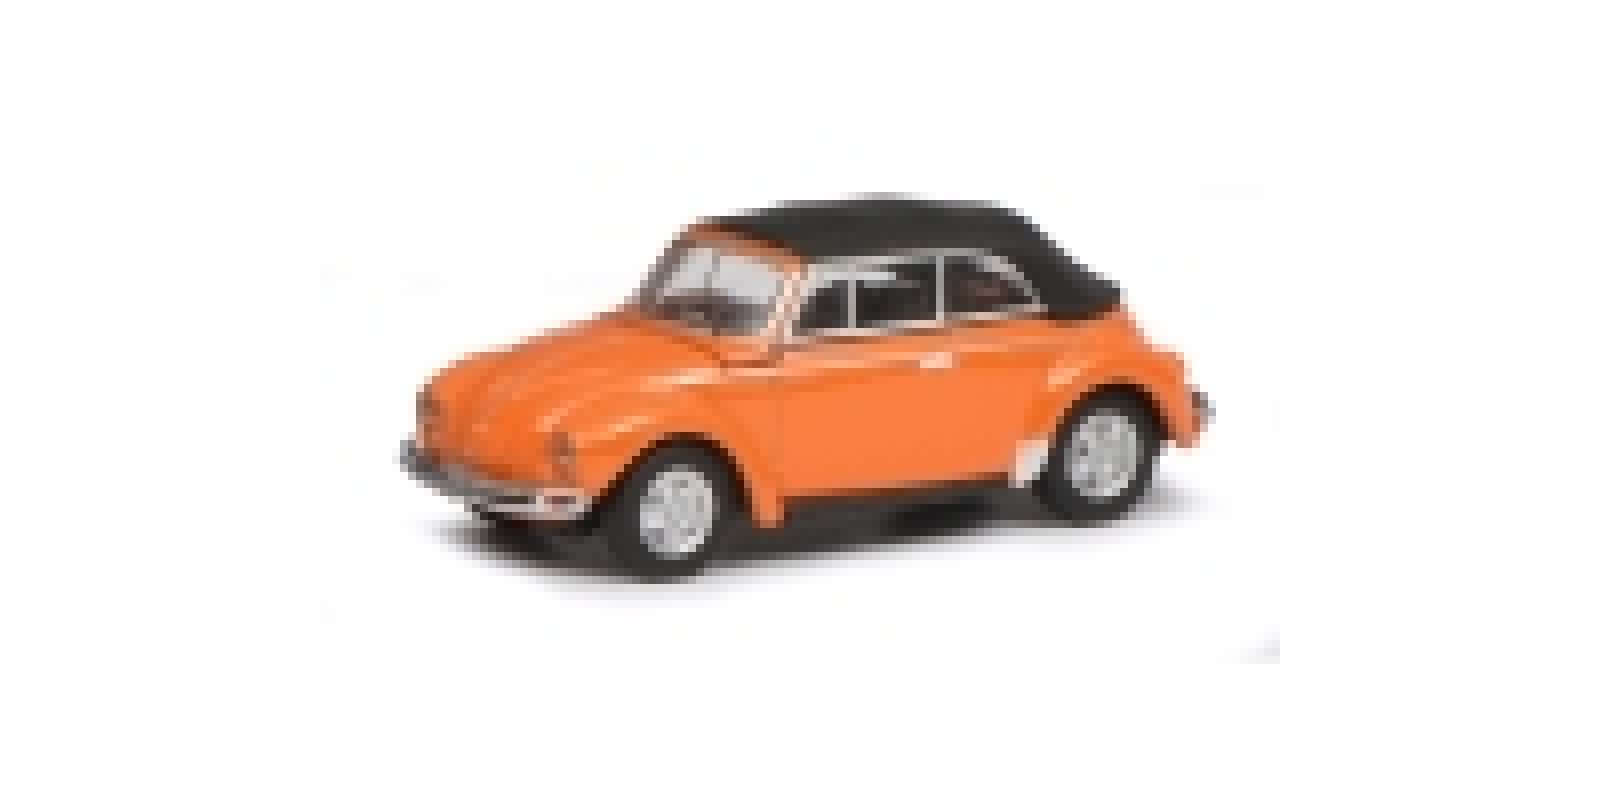 SC452654800 VW Kafer Cabrio ,orange 1:87